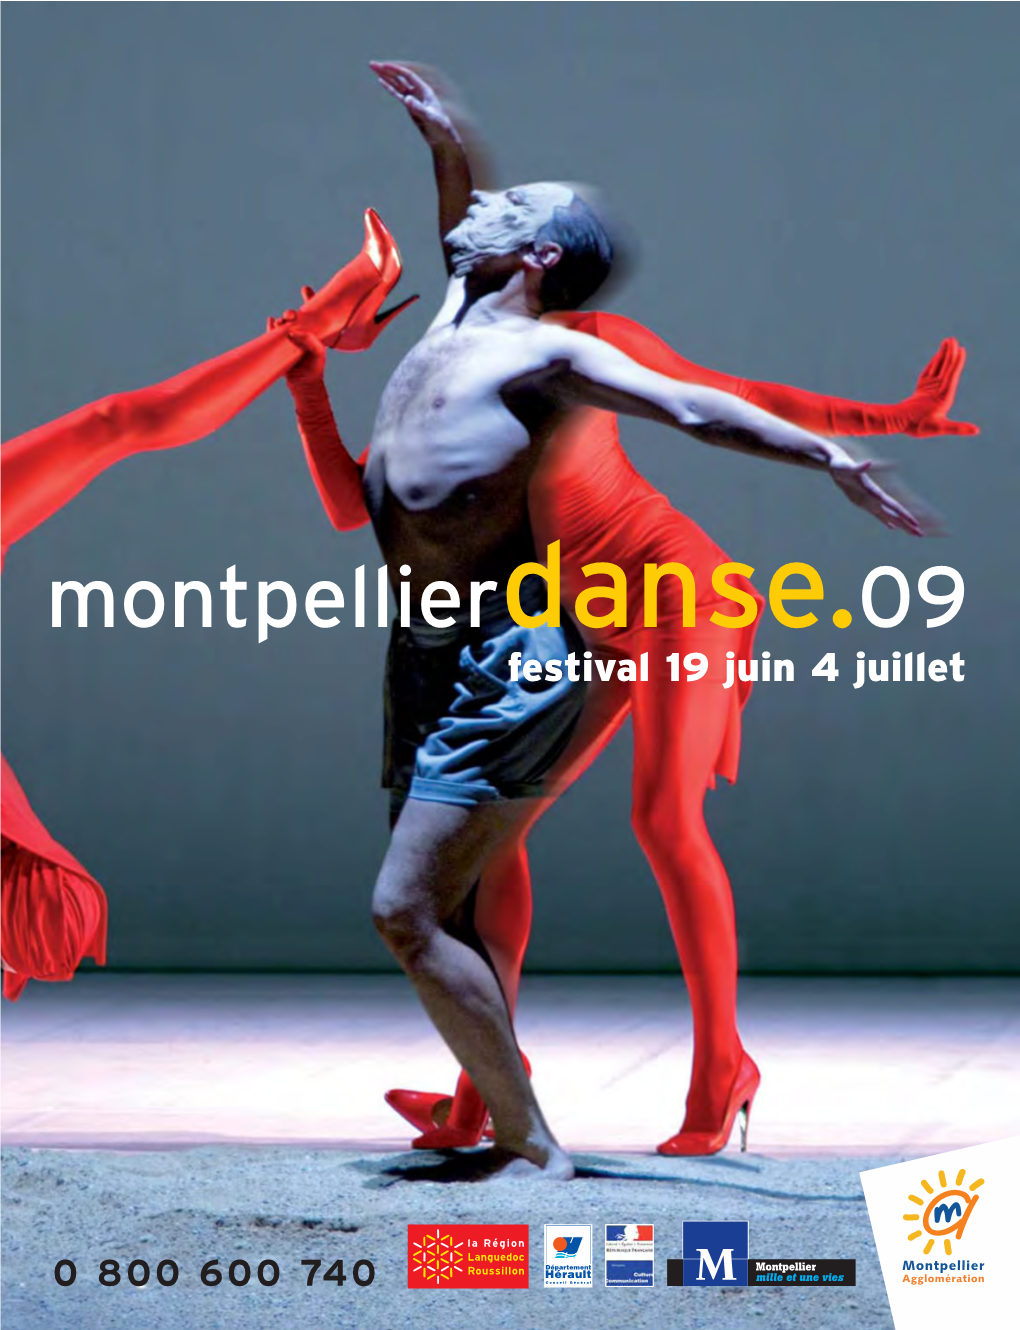 Montpellierdanse.09 Festival 19 Juin 4 Juillet